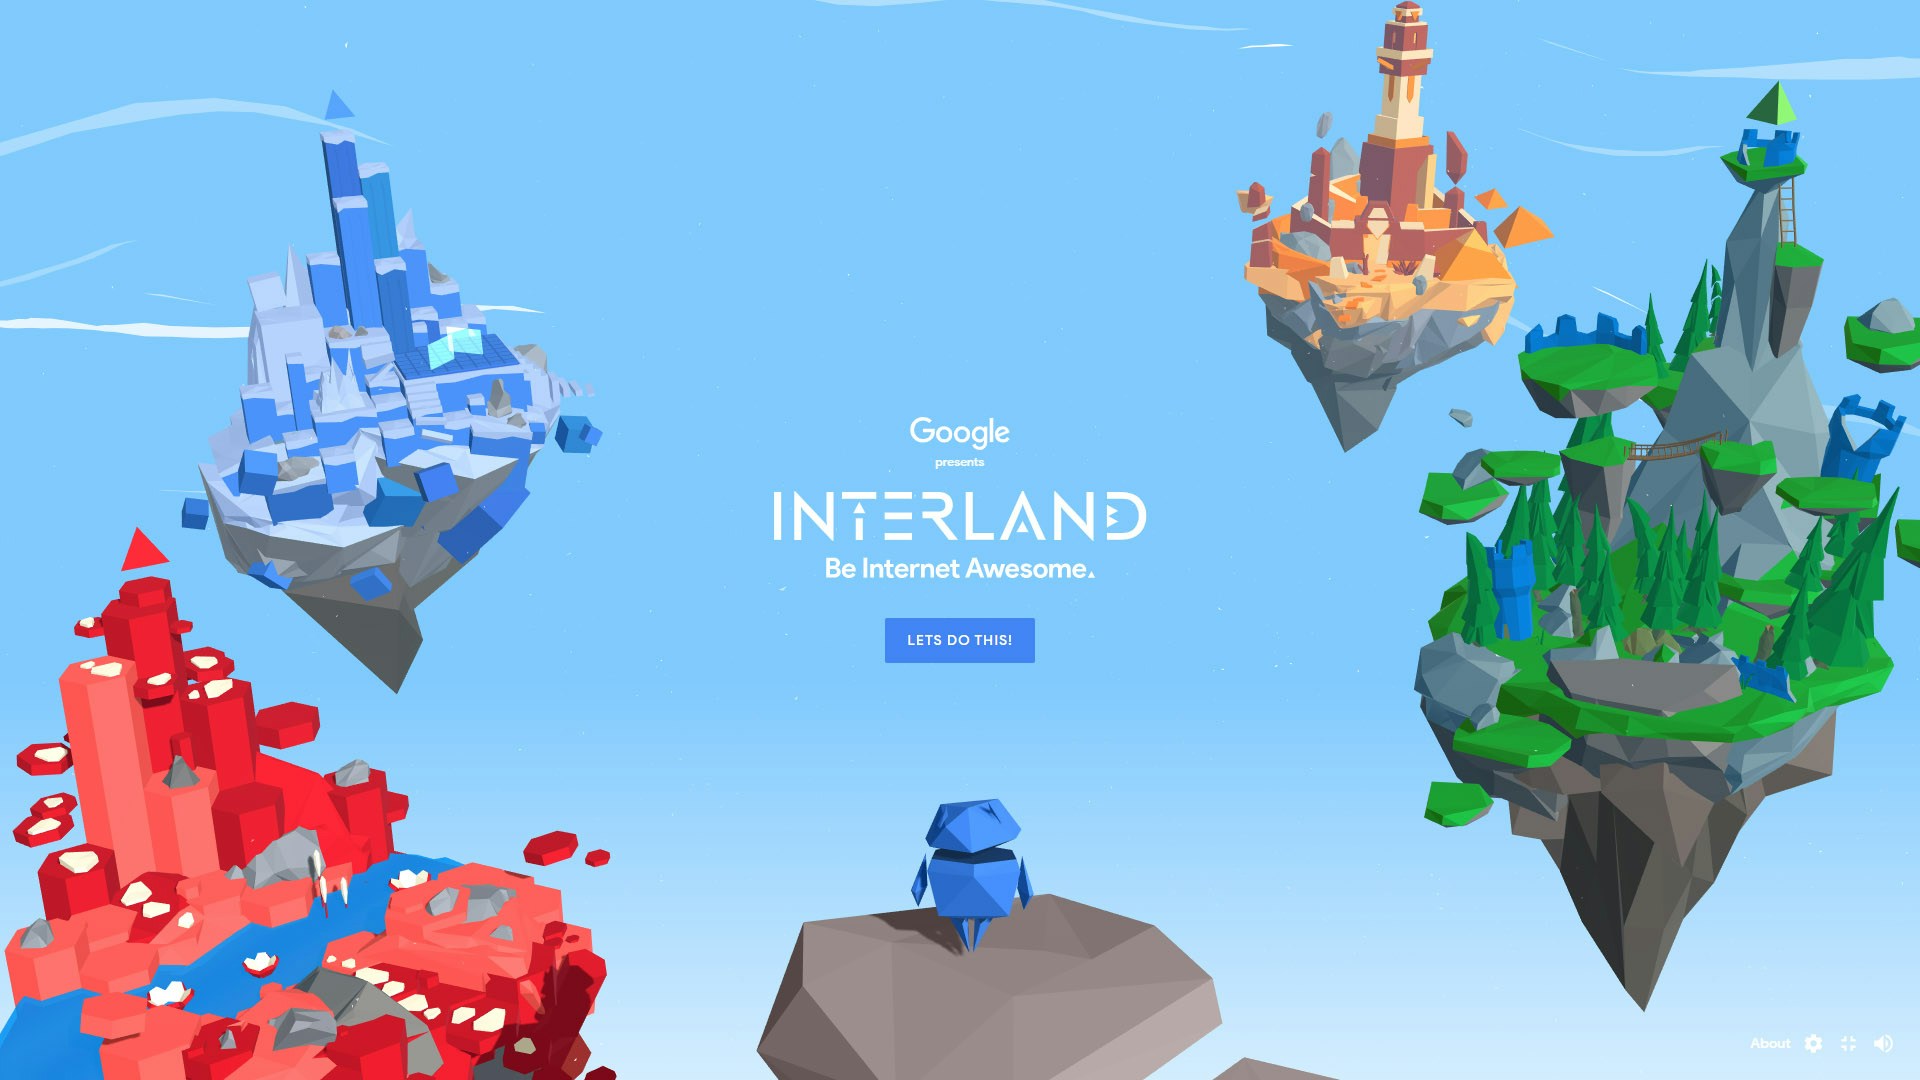 Google Interland start screen with playful environment